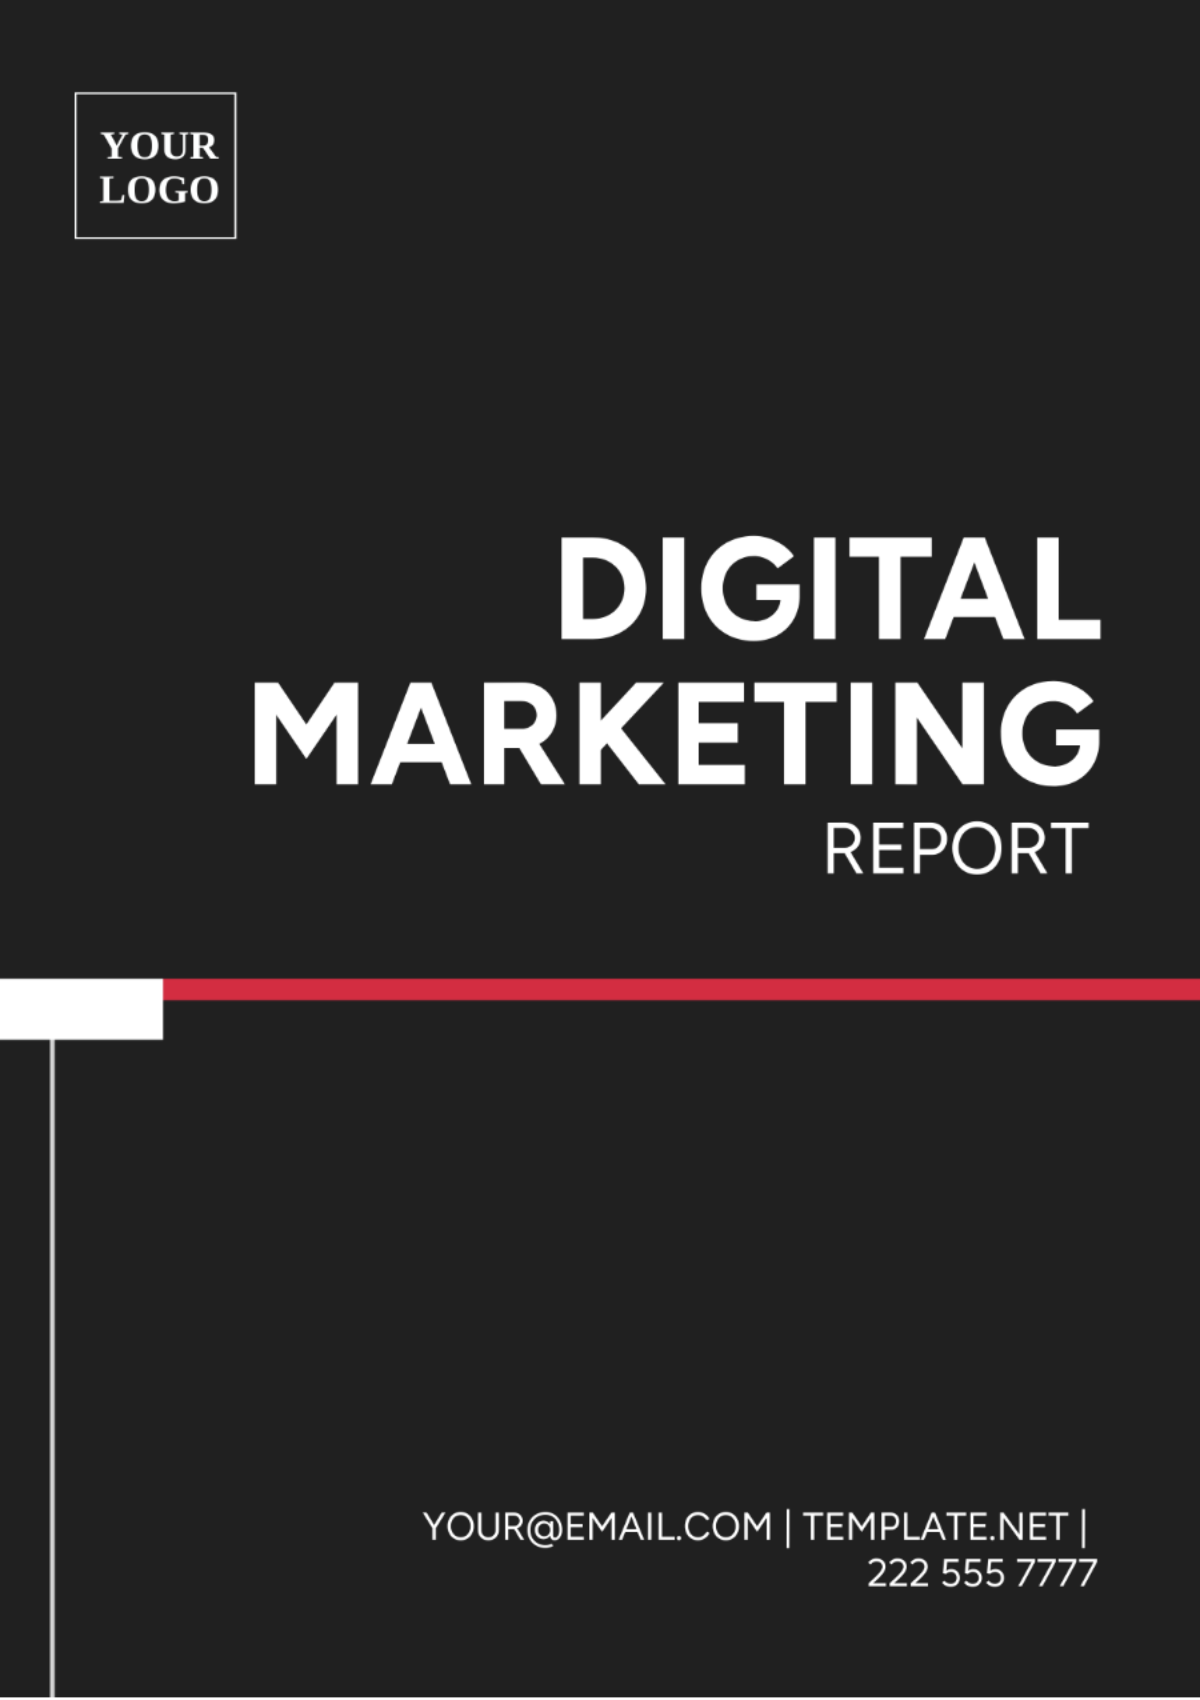 Digital Marketing Report Template